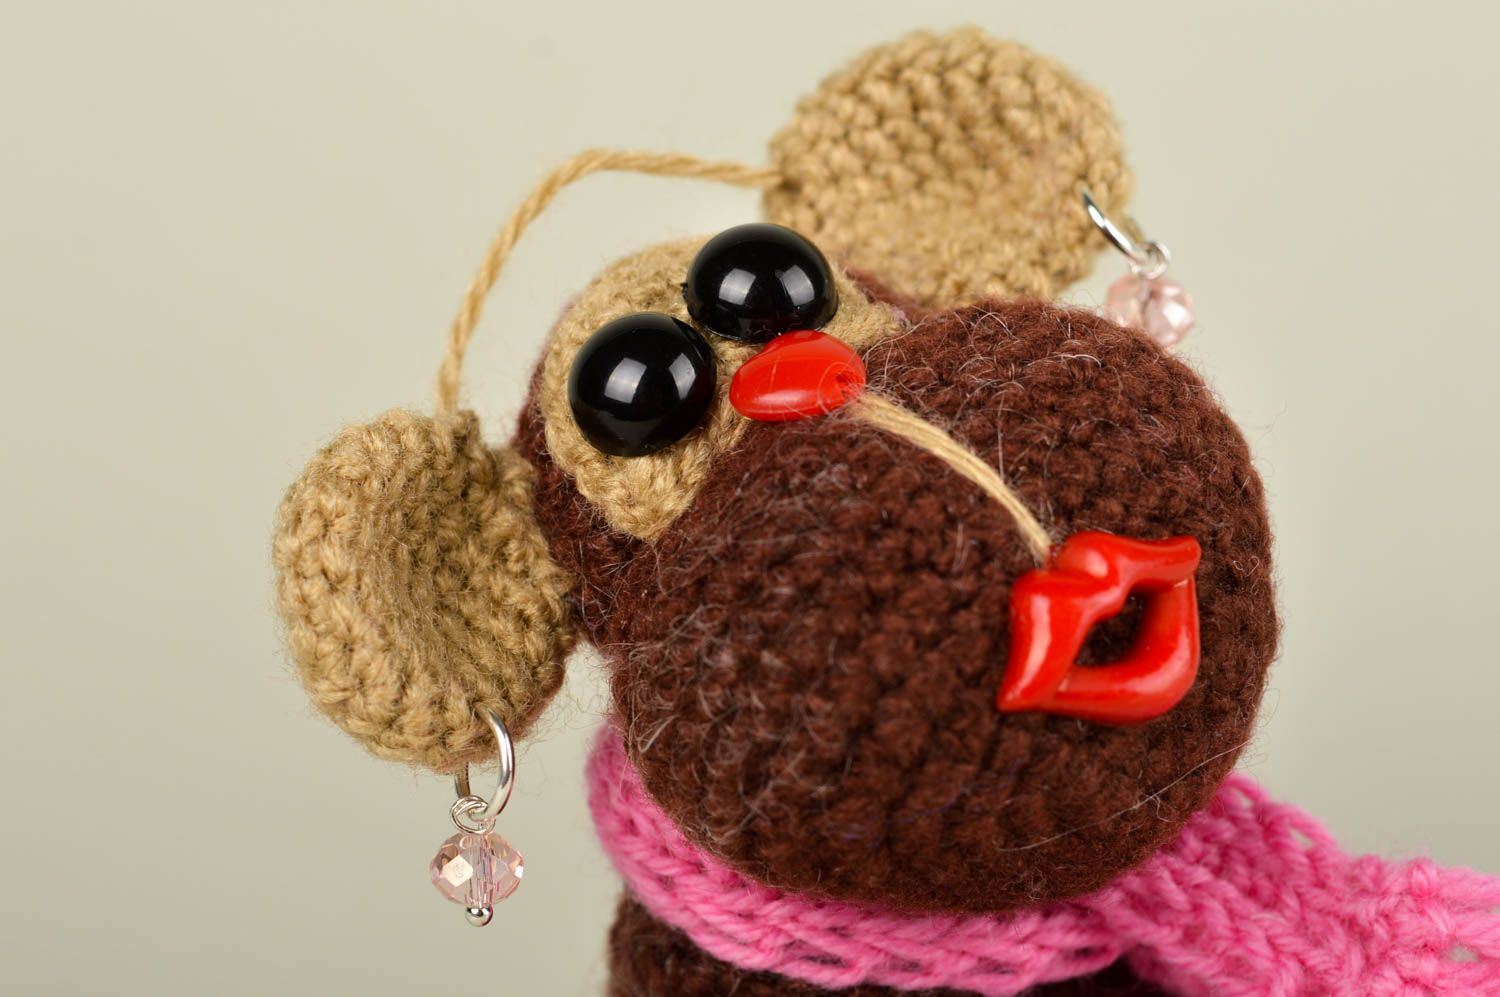 Hand-crocheted creative toy handmade stylish toy for babies nursery decor photo 2